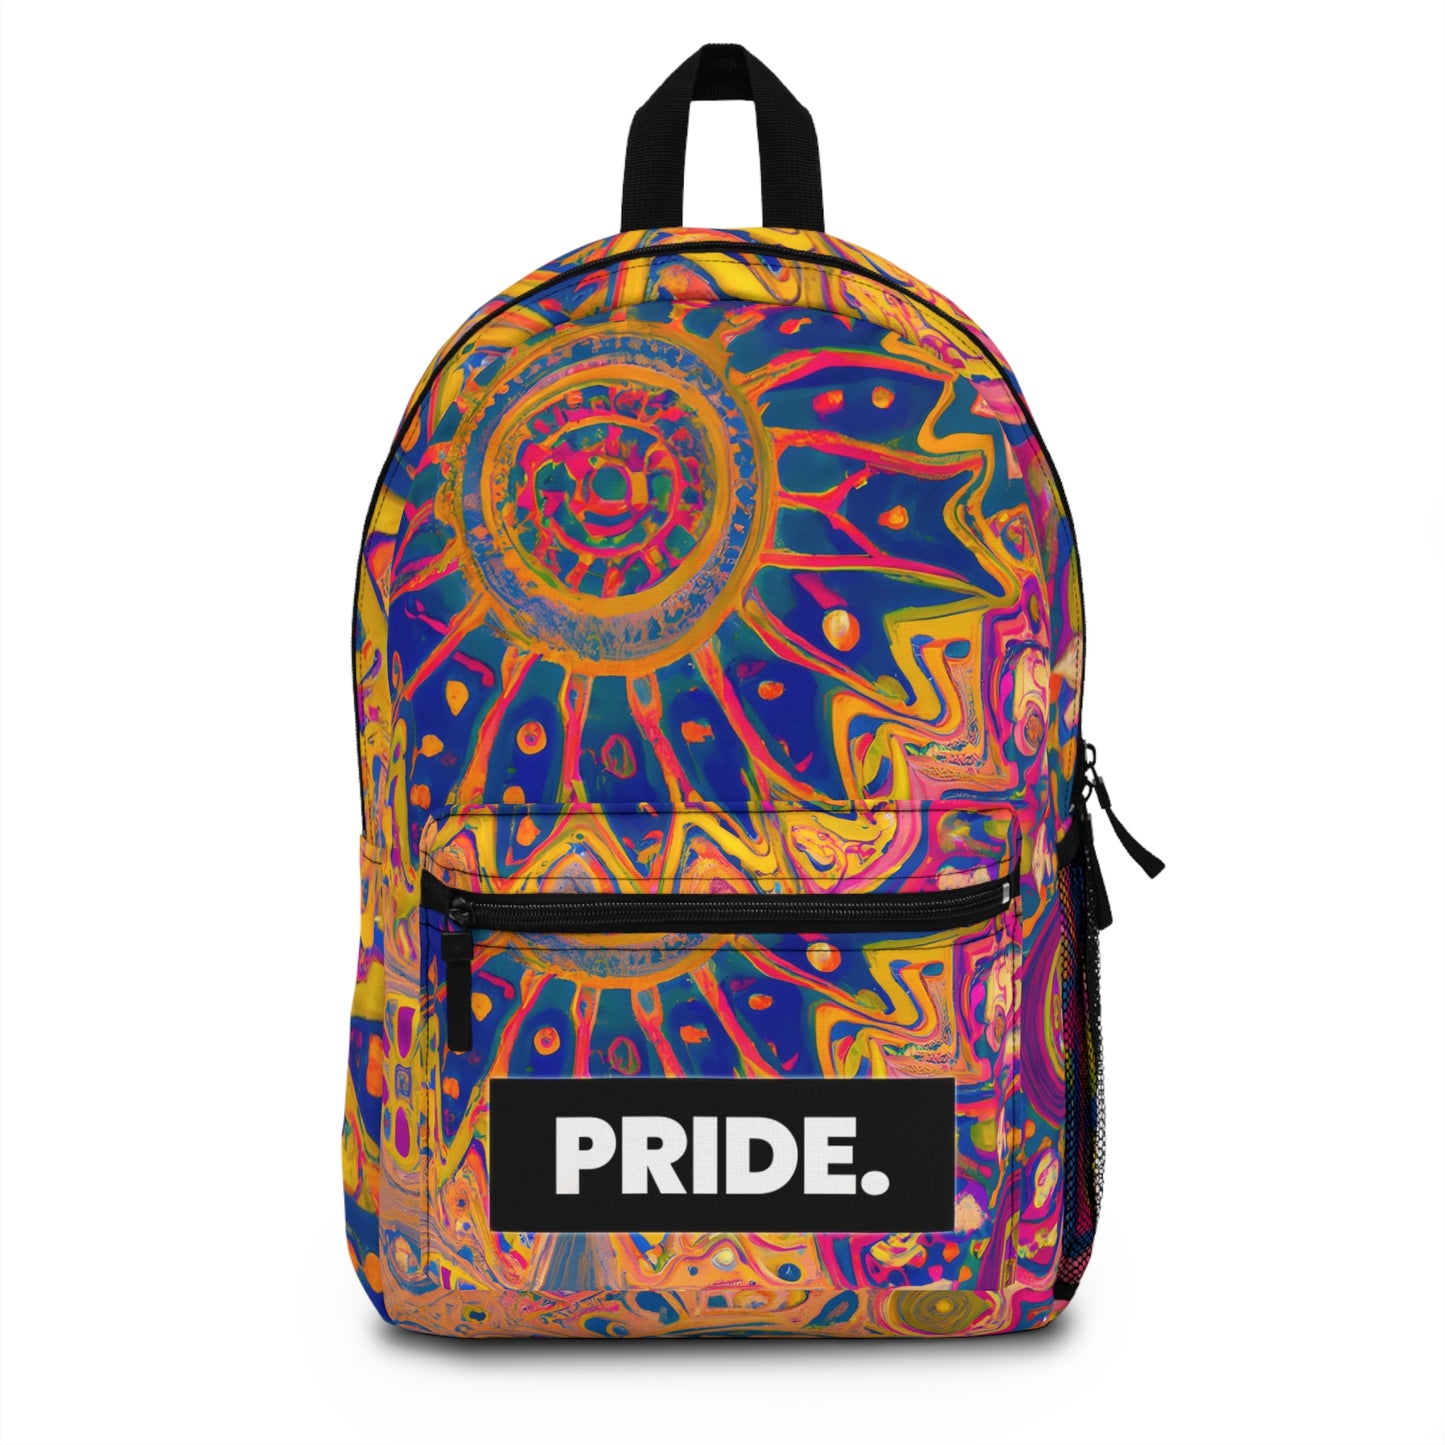 FifiFlamingo - Gay Pride Backpack